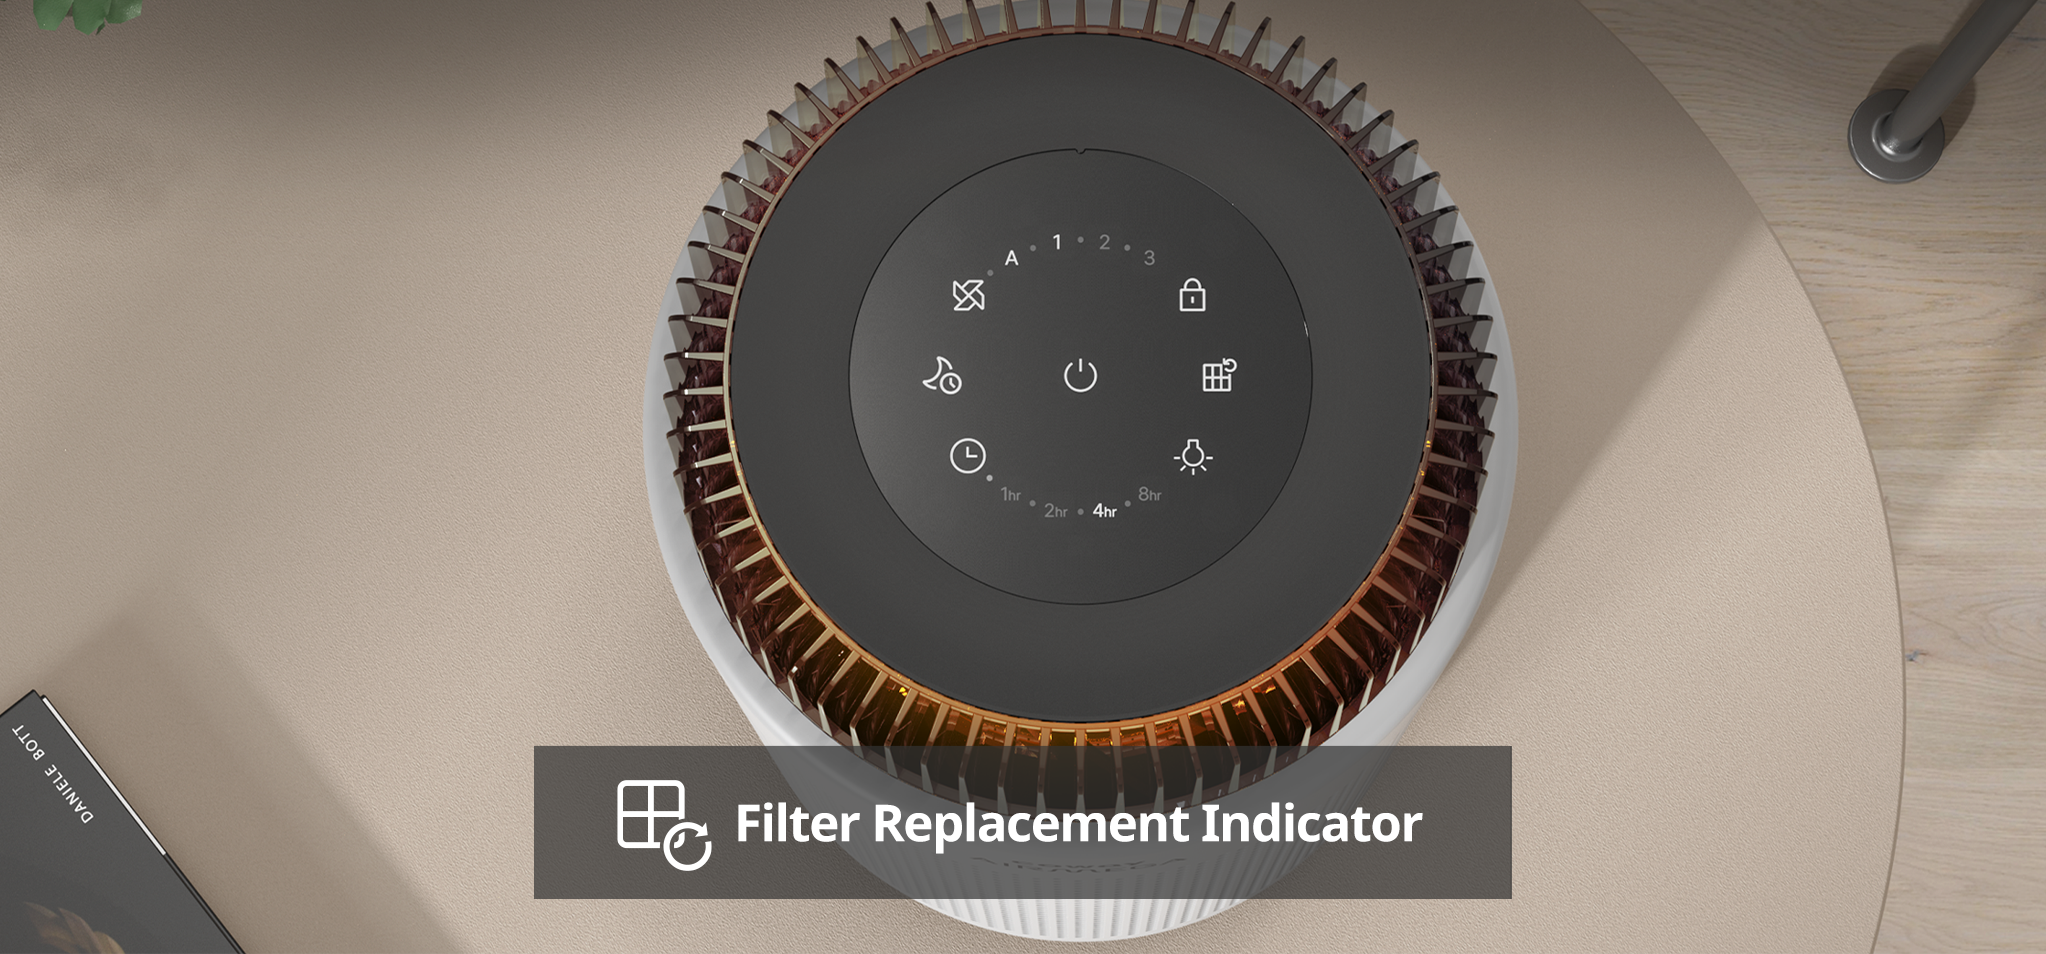 Airmega 100 has filter replacement indicator